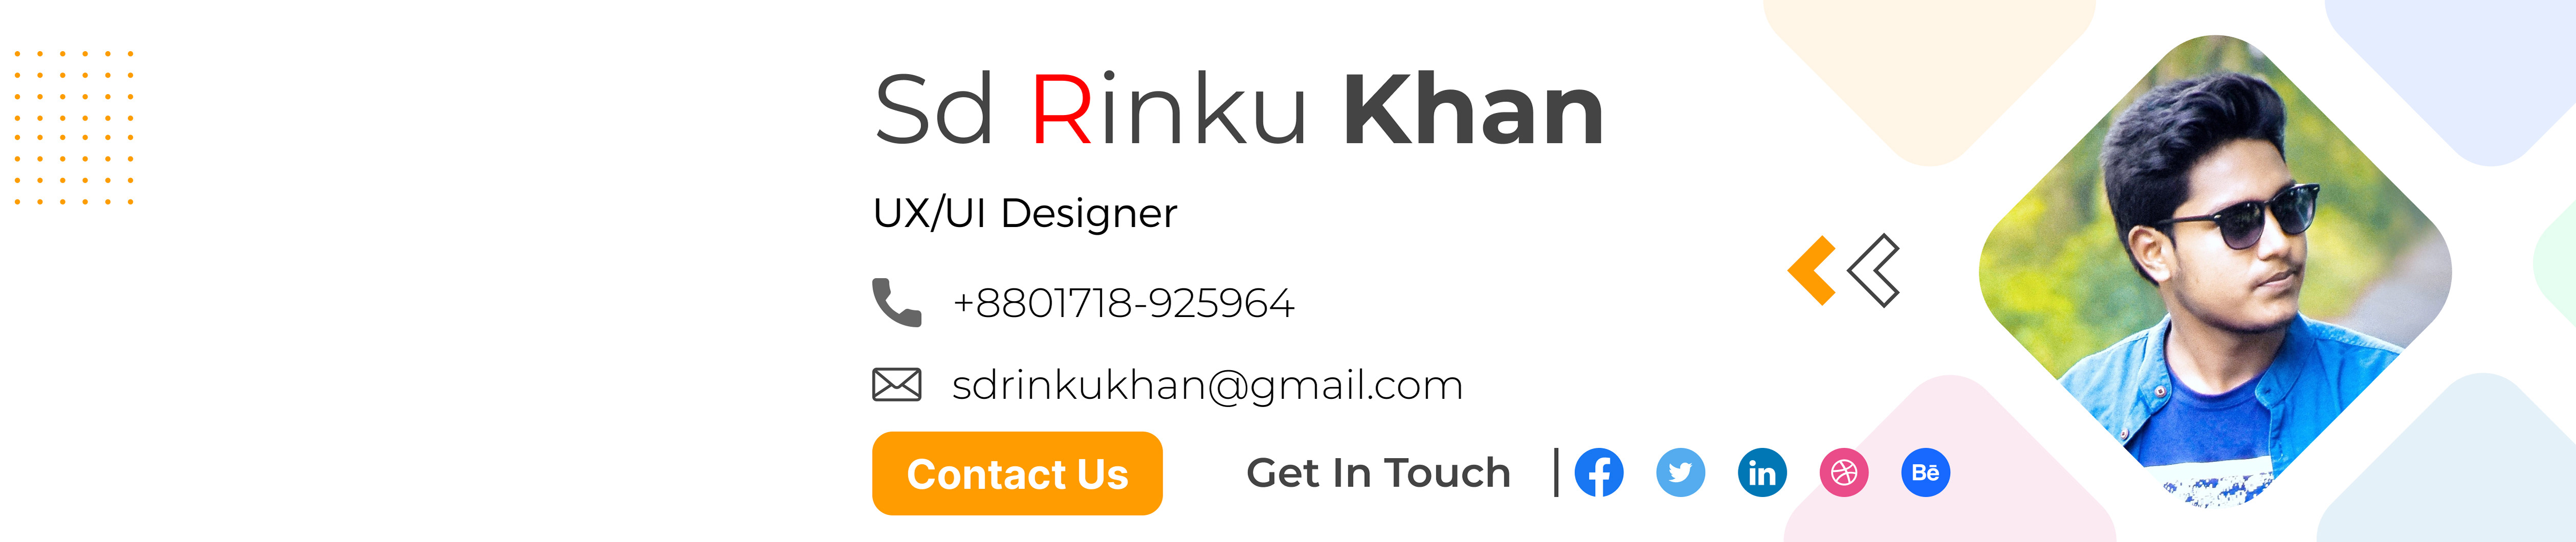 Sd Rinku Khan's profile banner